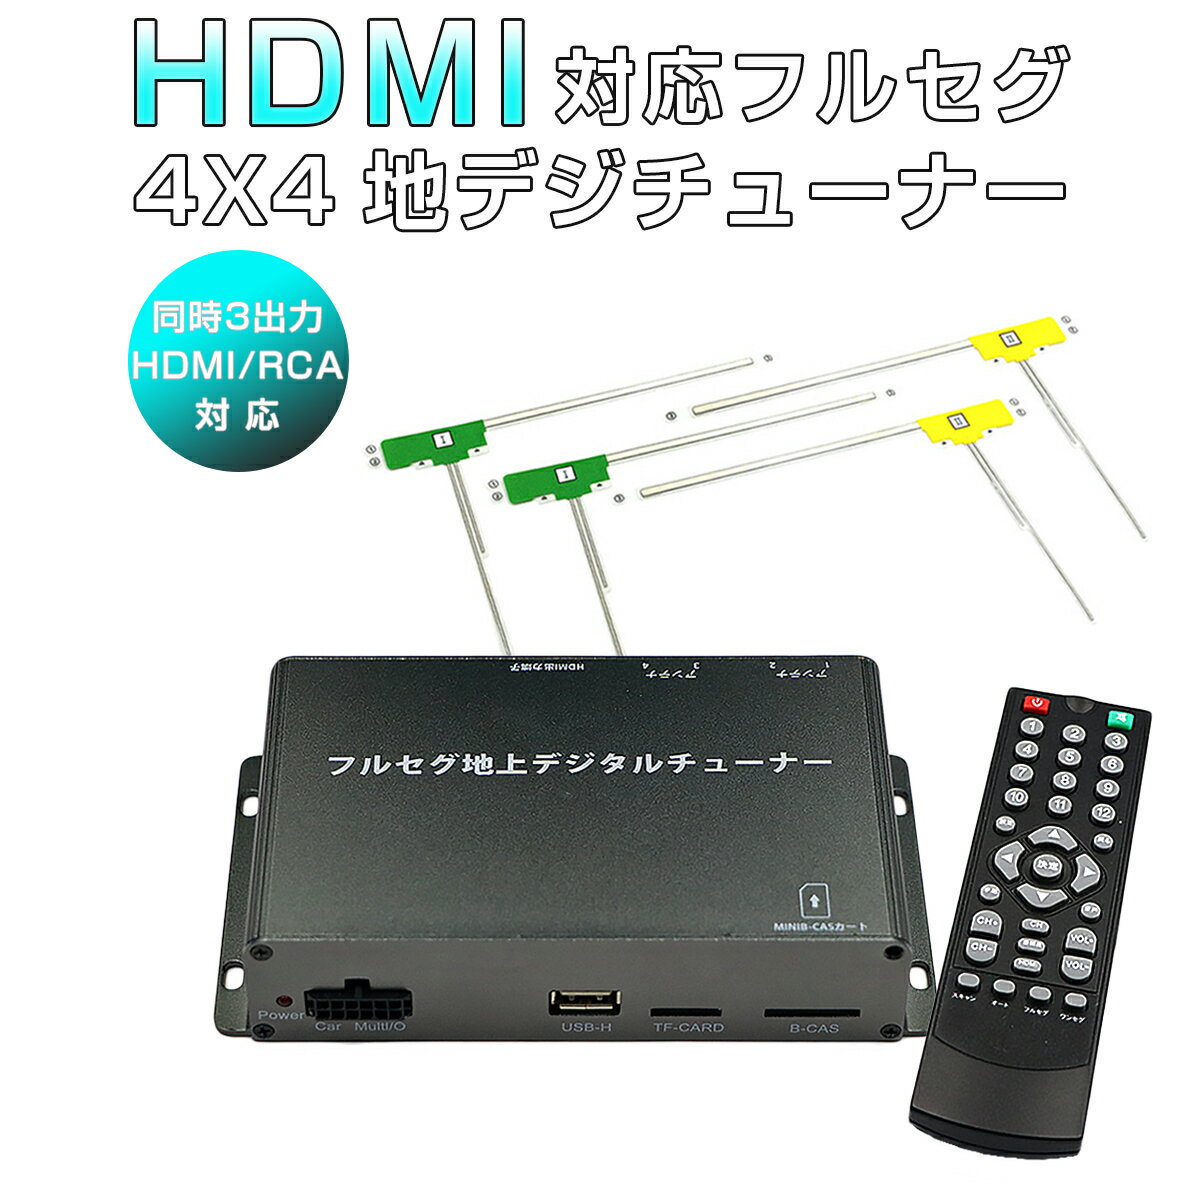 MITSUBISHI用の非純正品 レグナム 地デジチューナー カーナビ ワンセグ フルセグ HDMI 4x4 高性能 4チューナー 4アンテナ 自動切換 150km/hまで受信 高画質 古い車載TVやカーナビにも使える 12V/24V フィルムアンテナ miniB-CASカード付き 6ヶ月保証